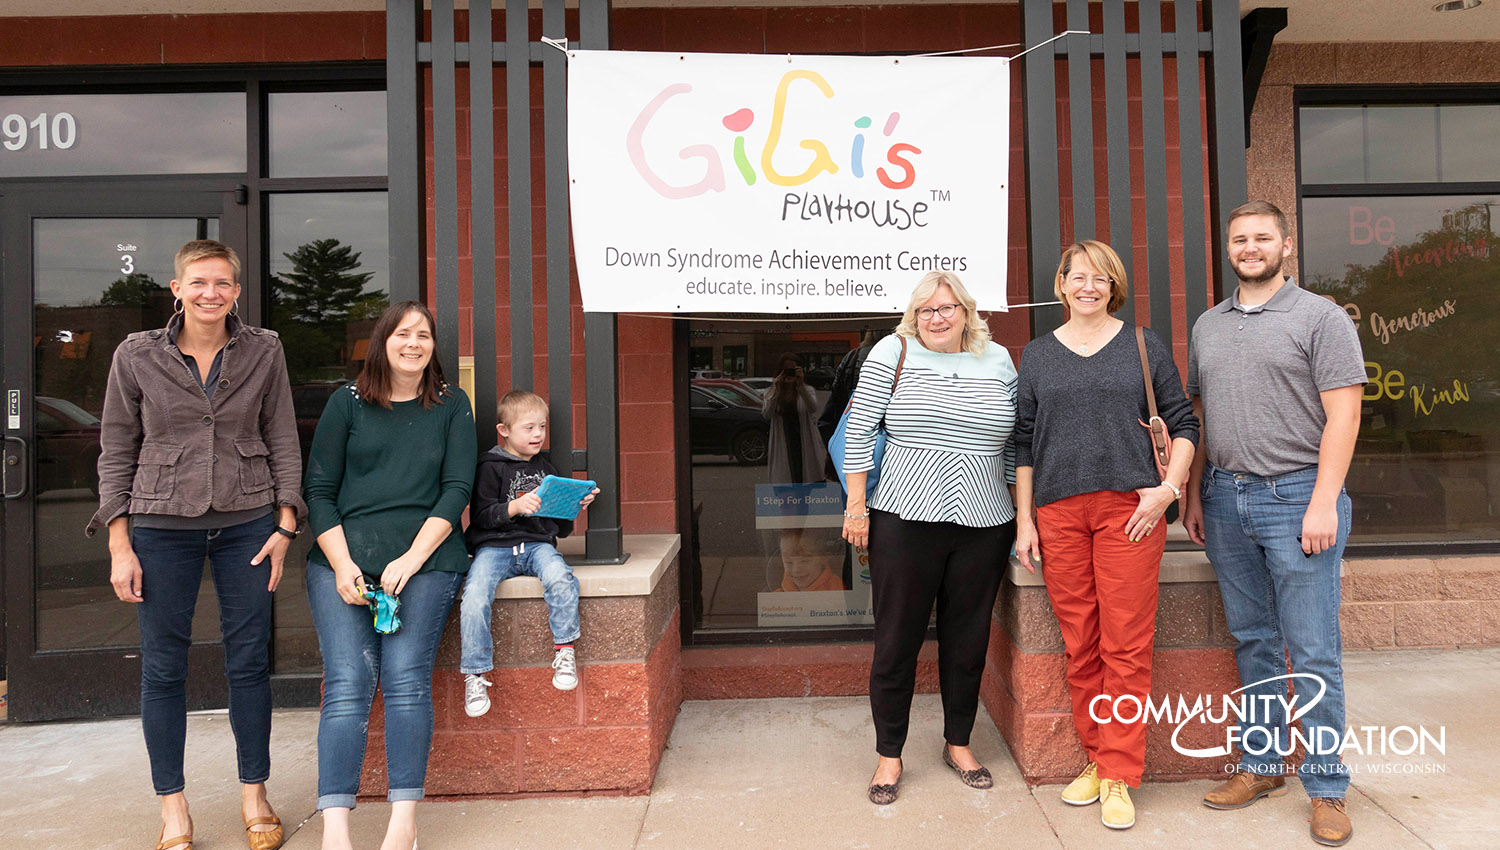 GiGi's Playhouse community foundation